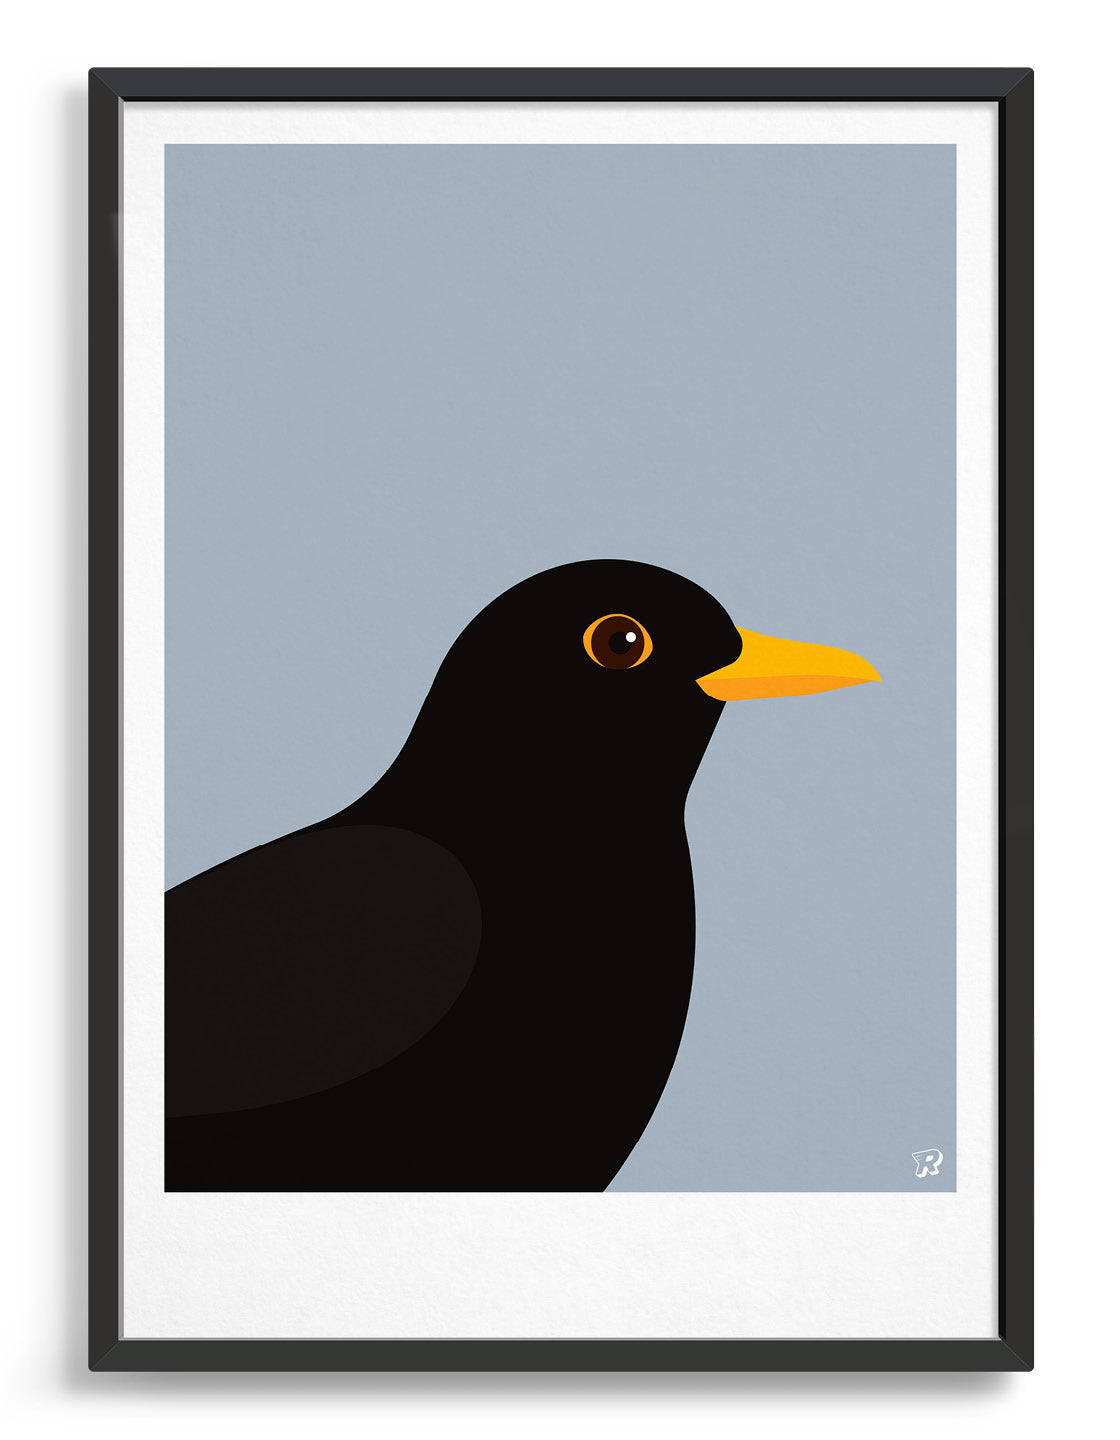 modern Blackbird illustration against a light grey background